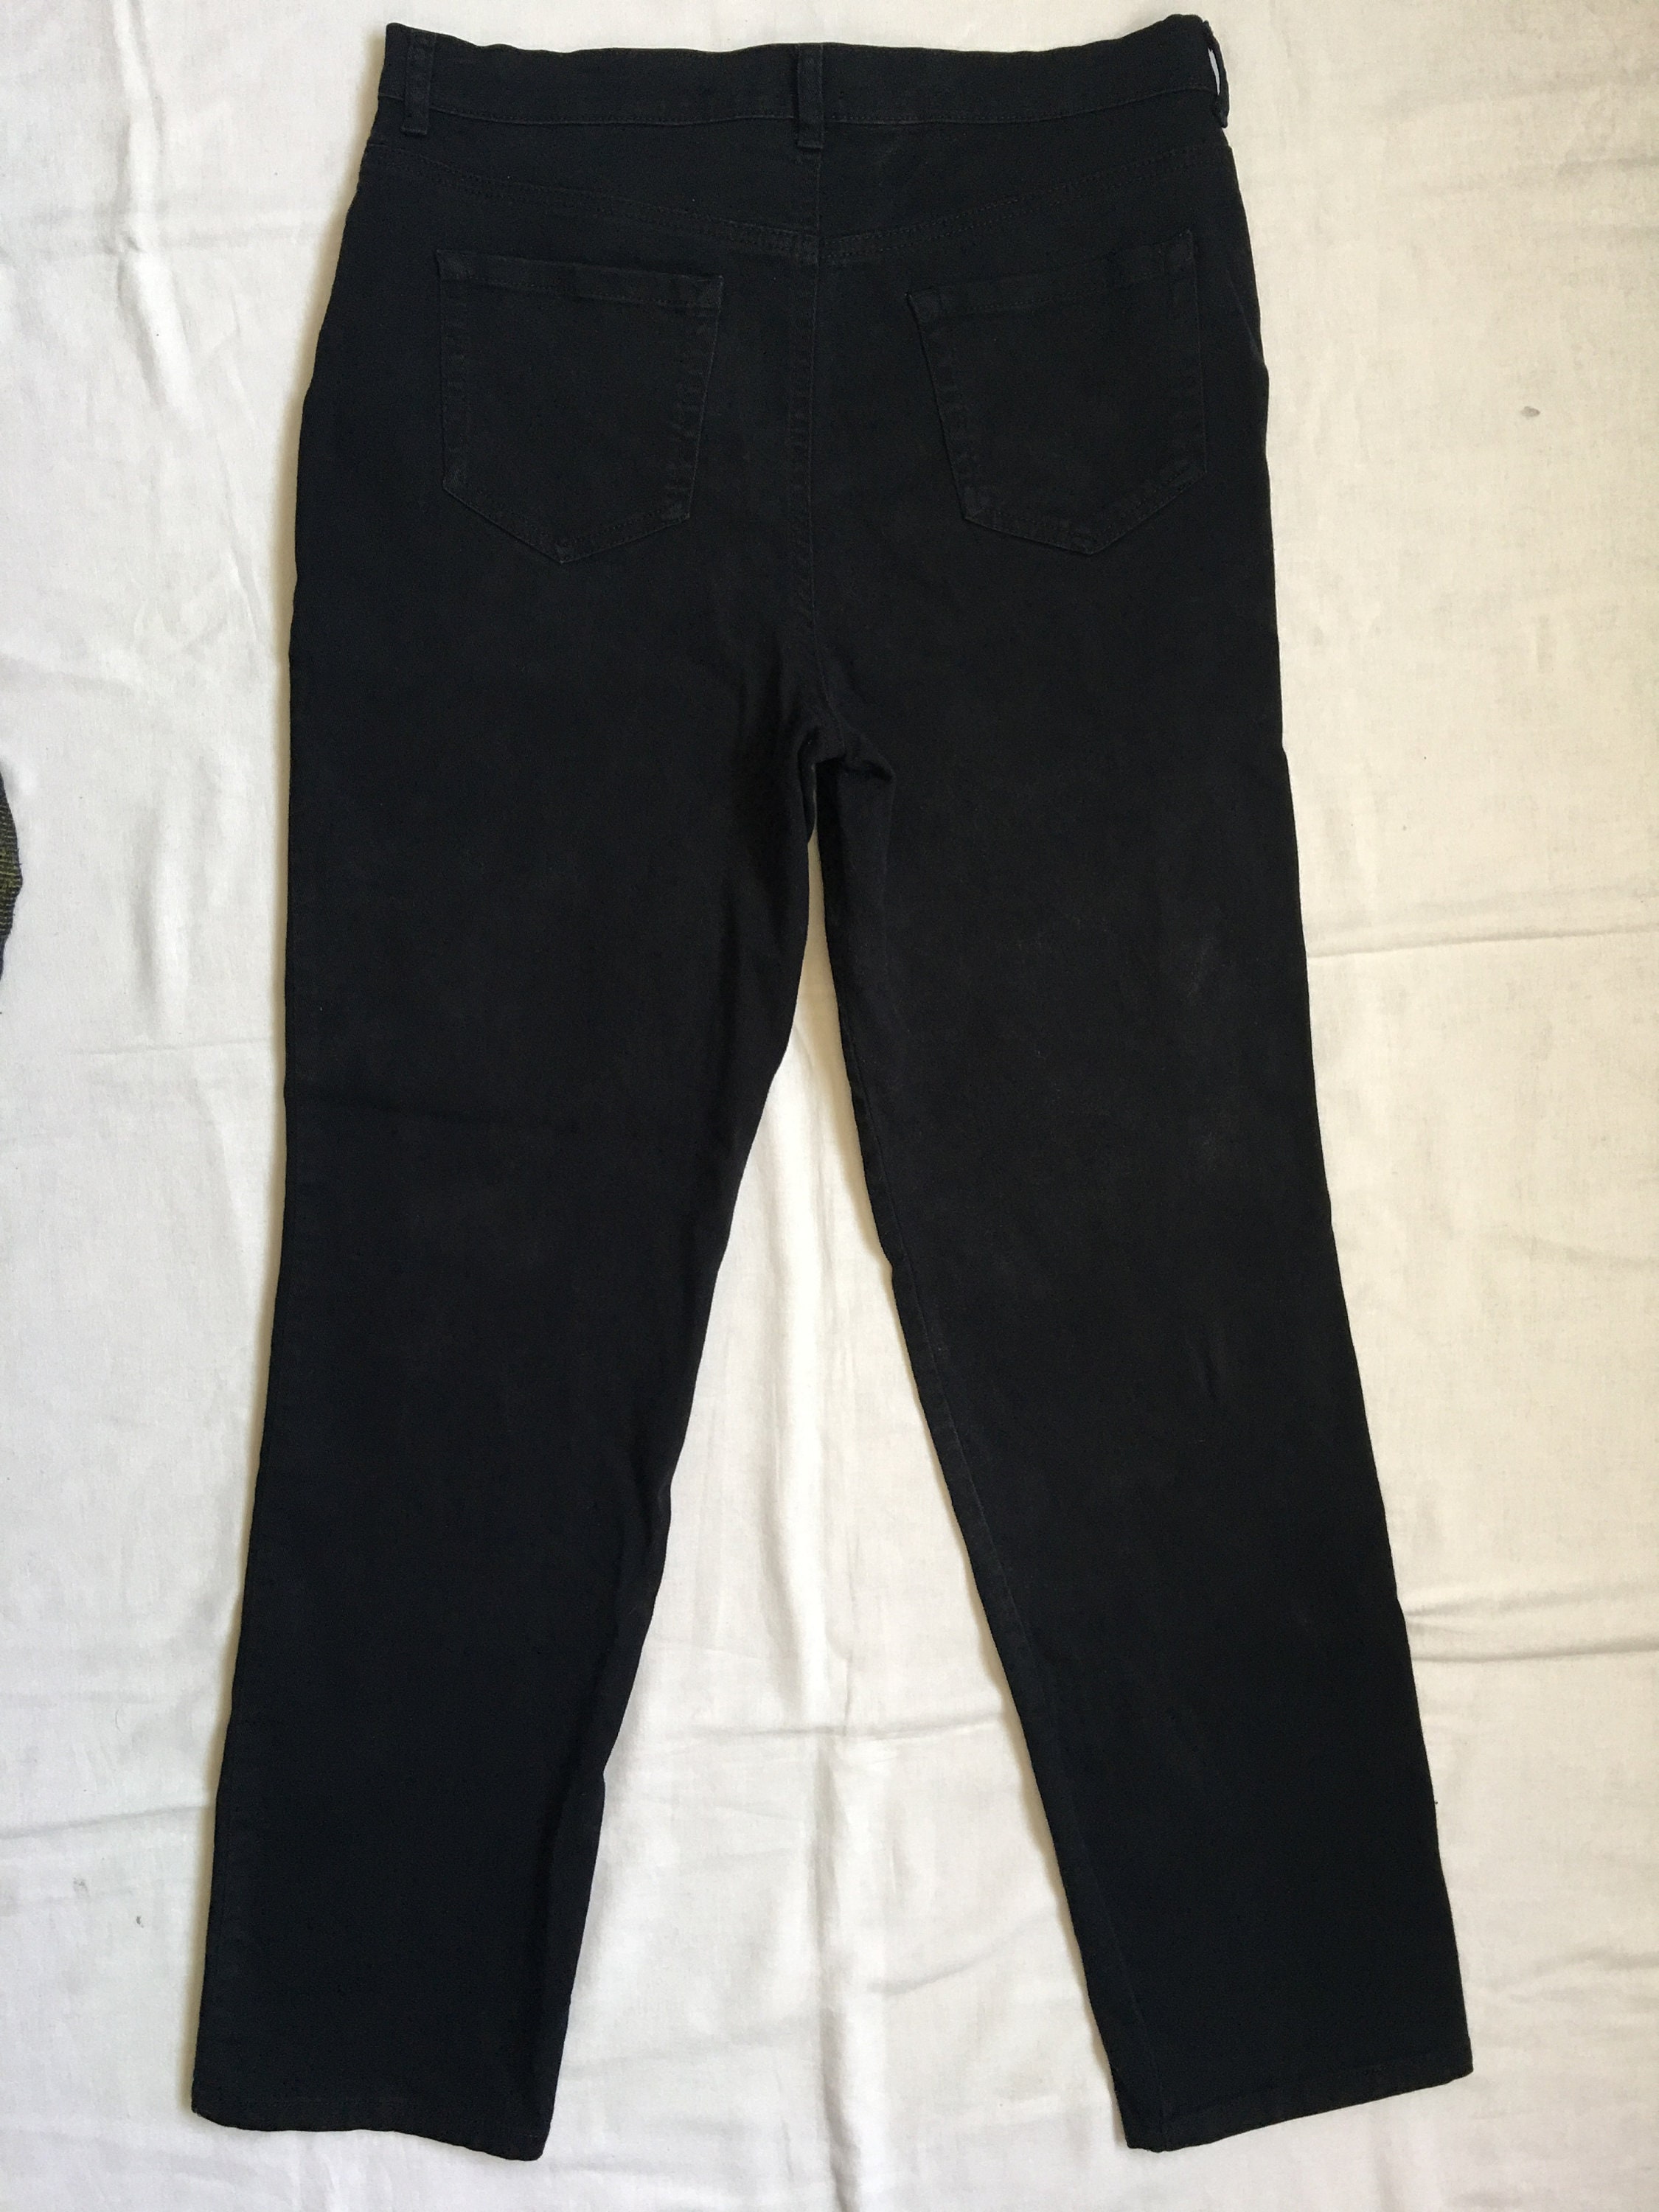 Women's Black Denim Pants-33 Waist-black Jeans by Style & - Etsy